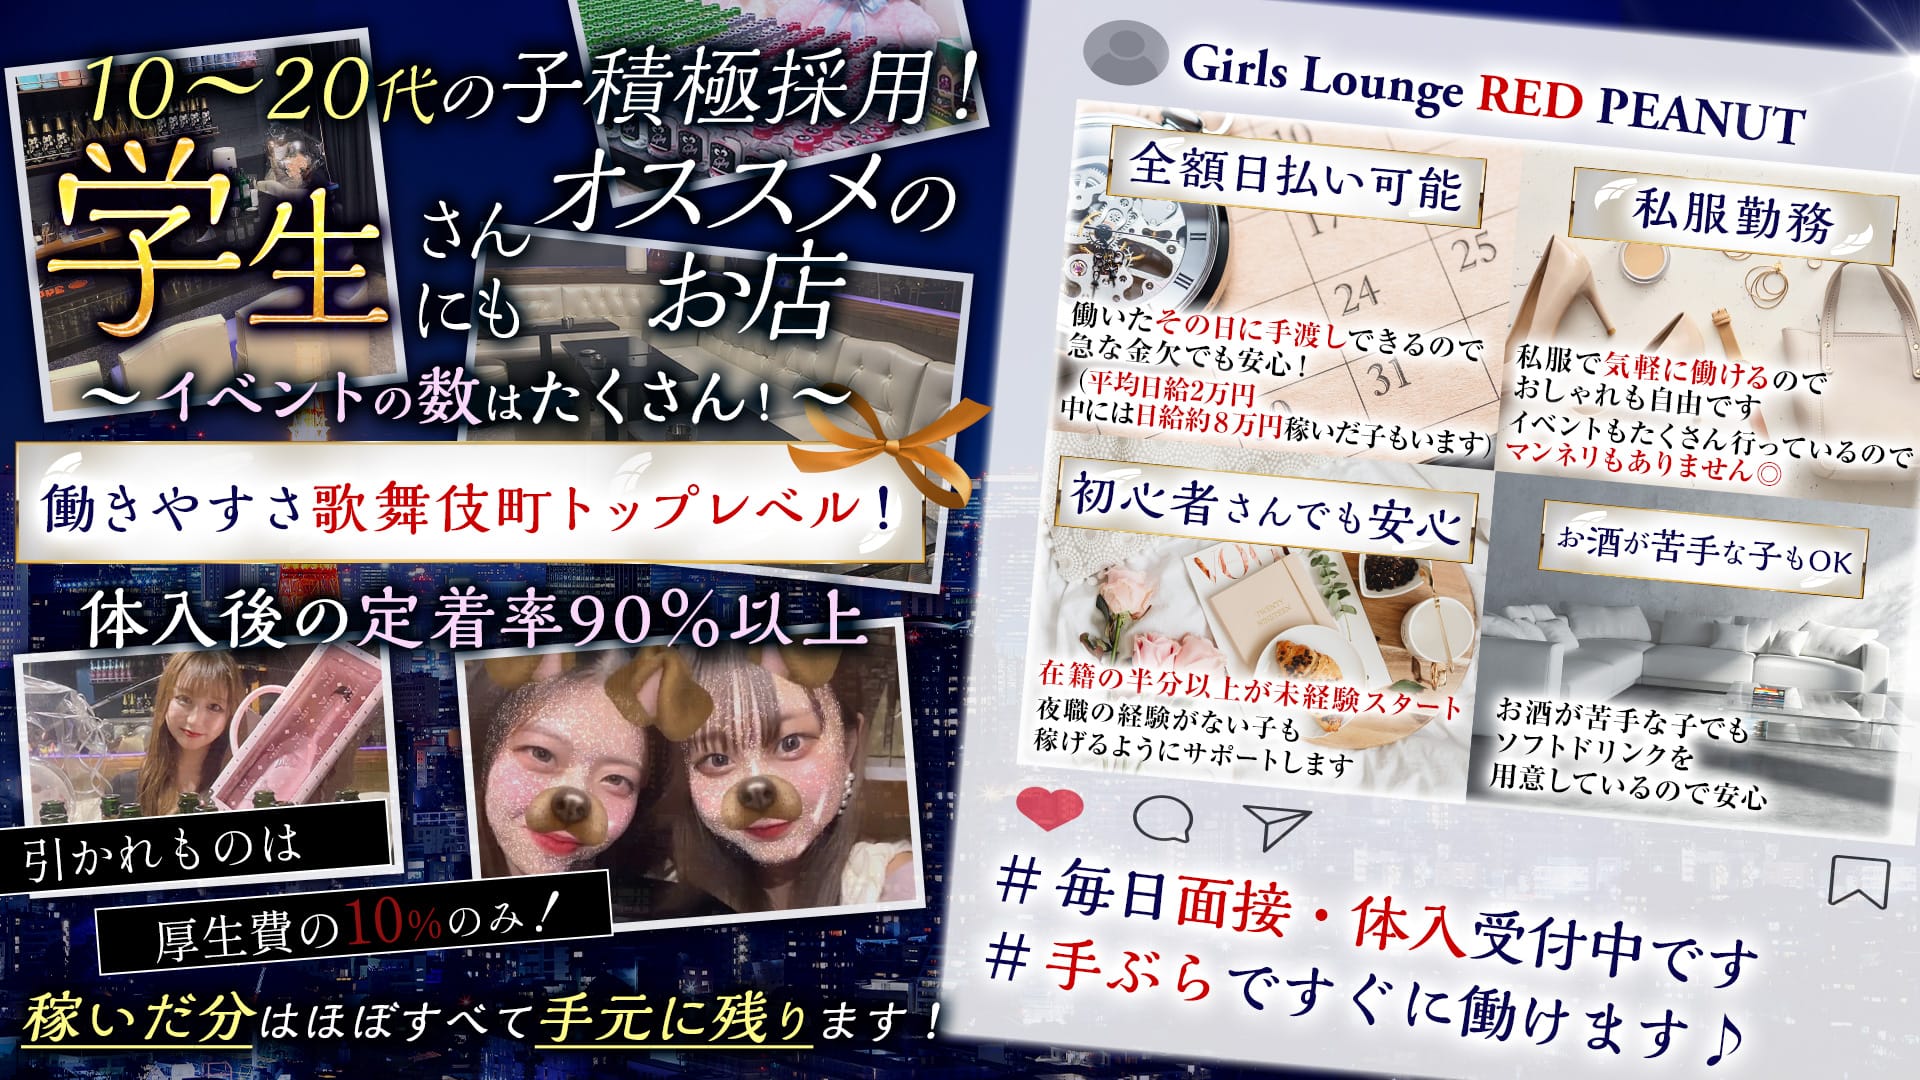 Girls Lounge RED PEANUT（レッドピーナッツ）【公式求人・体入情報】 歌舞伎町ガールズバー TOP画像